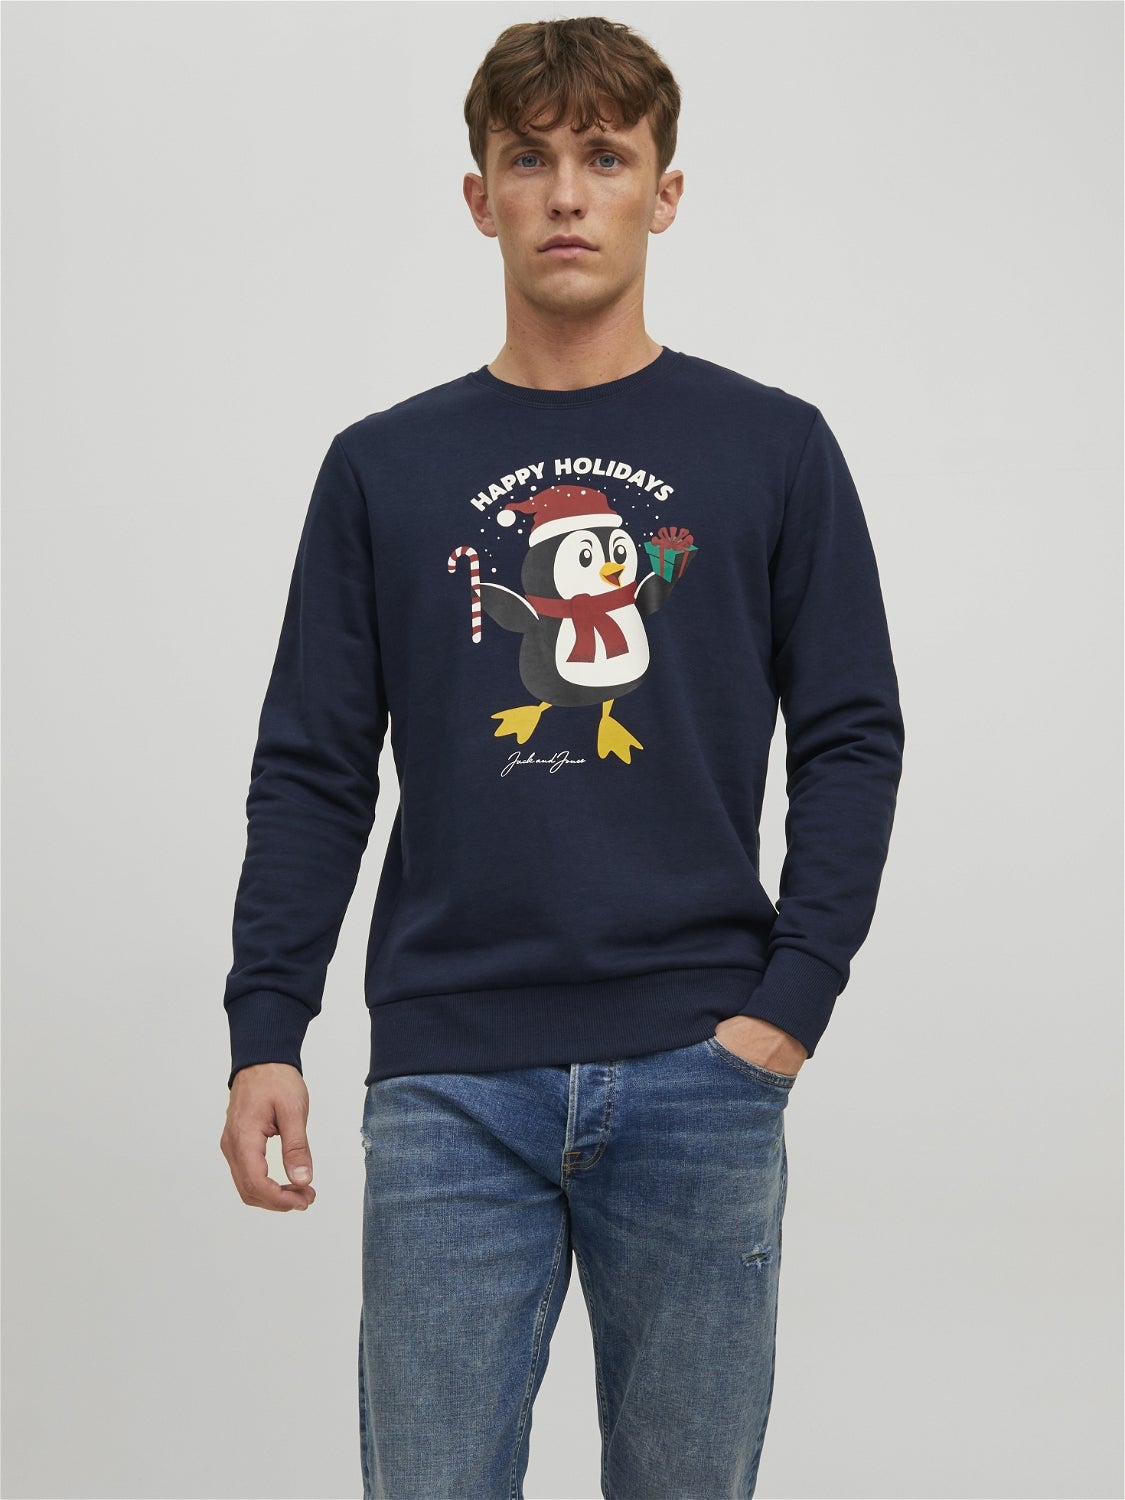 Jack & Jones sweatshirt MEN FASHION Jumpers & Sweatshirts Hoodless discount 84% Black/Gray L 